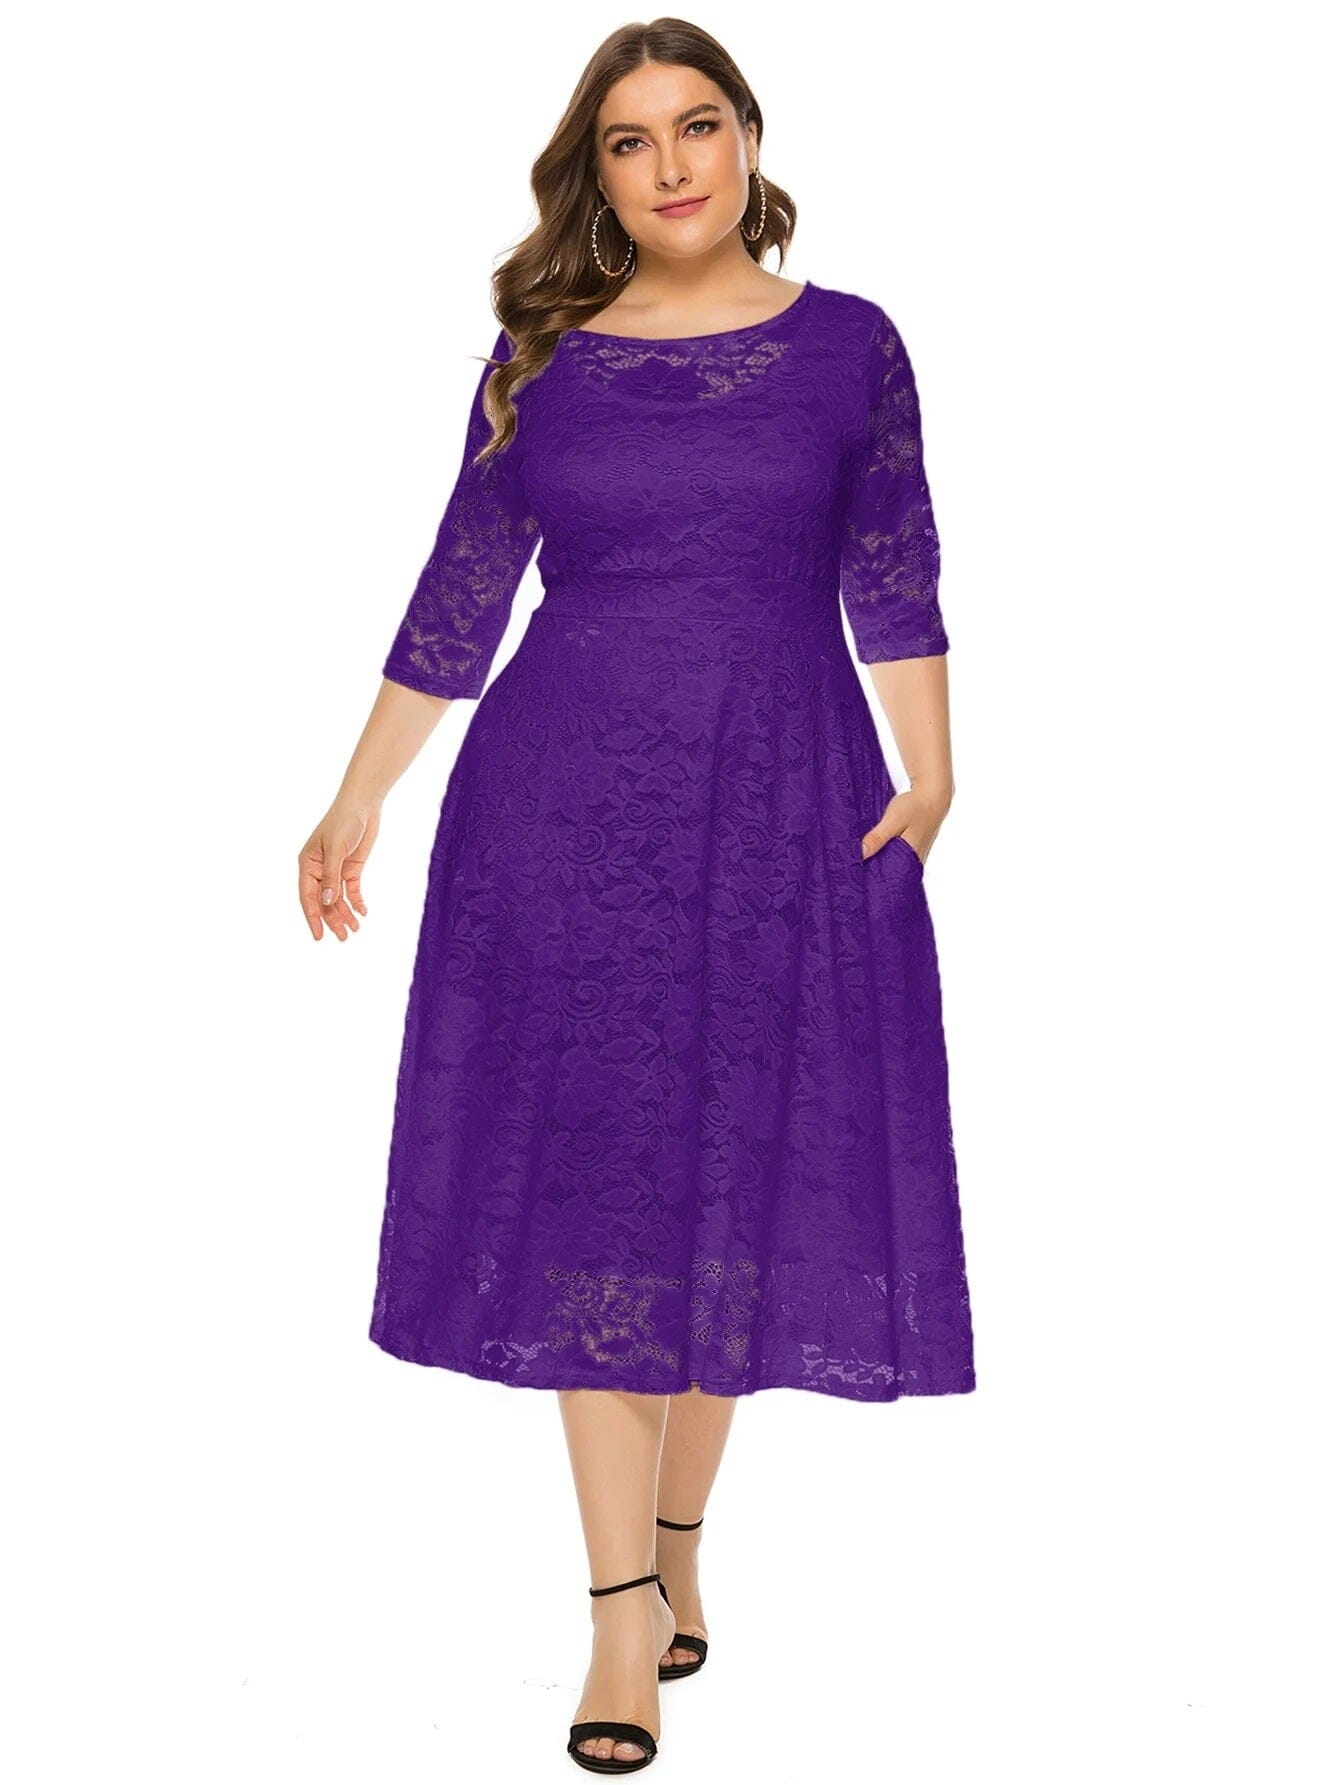 Women Plus Size Vintage Lace Swing Party Cocktail Wedding Midi Dress with pocket Dresses jehouze Purple XL 